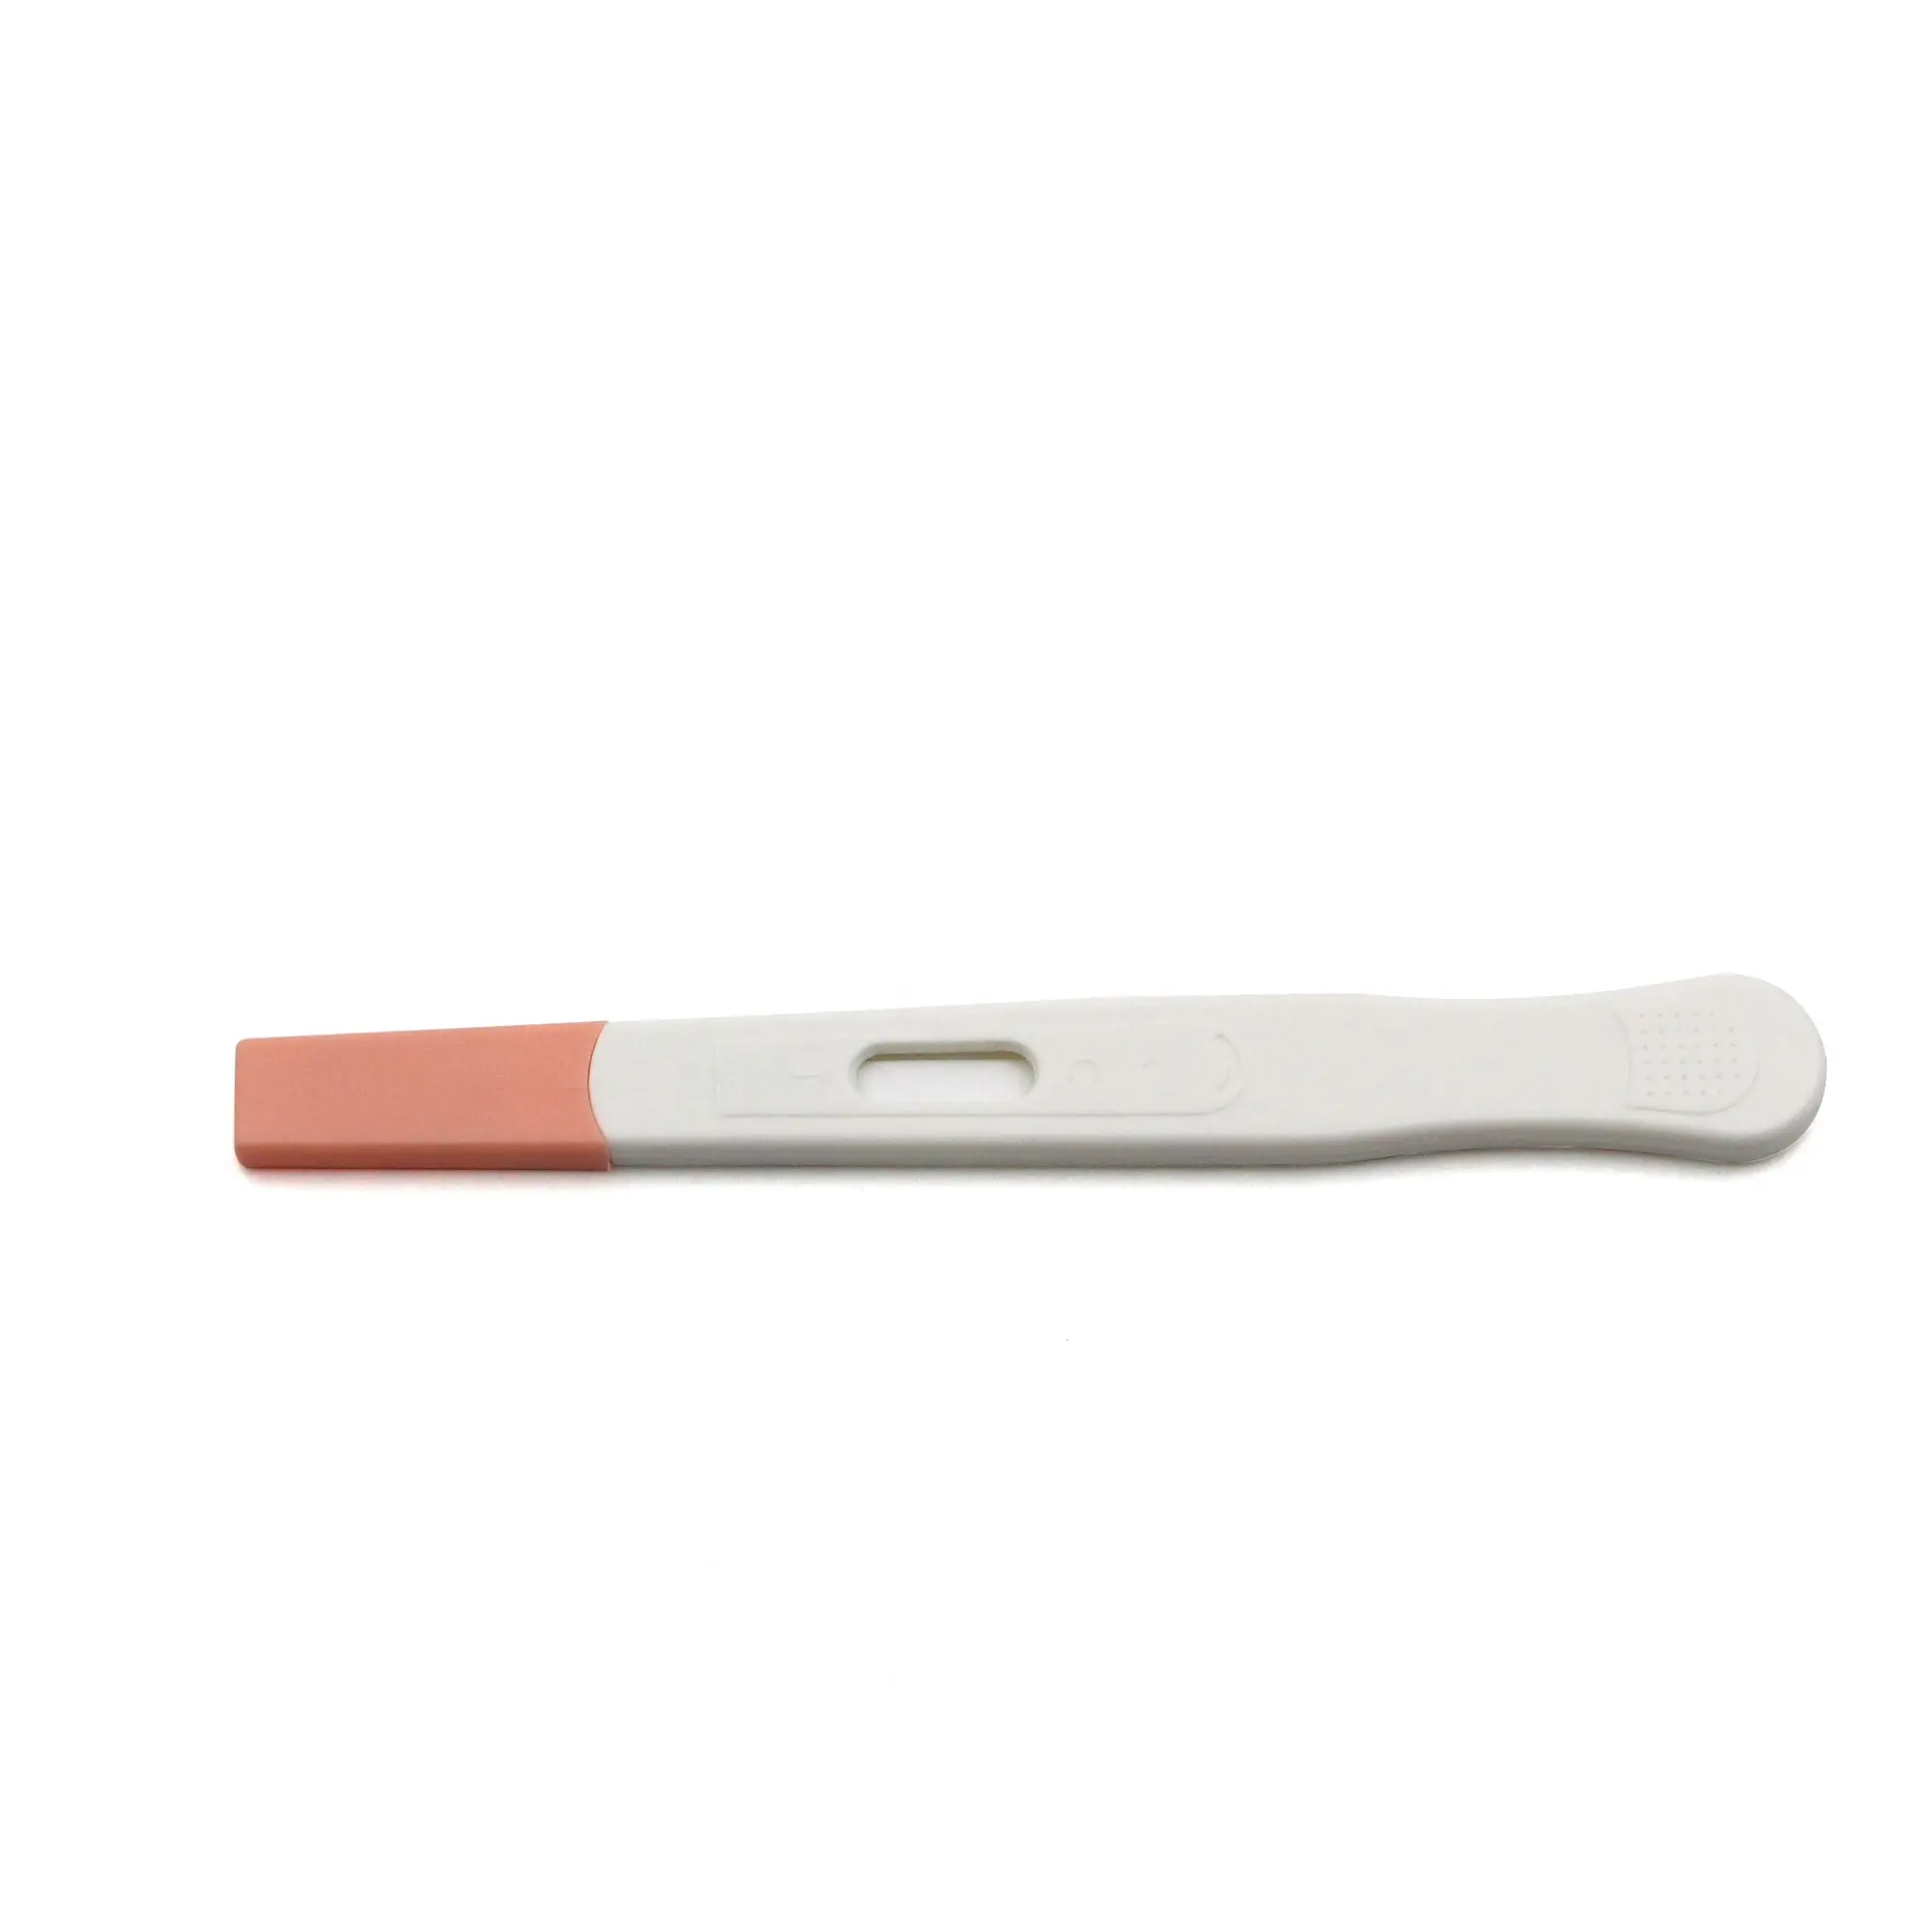 Home Blood Recare Pregnancy Test Kit